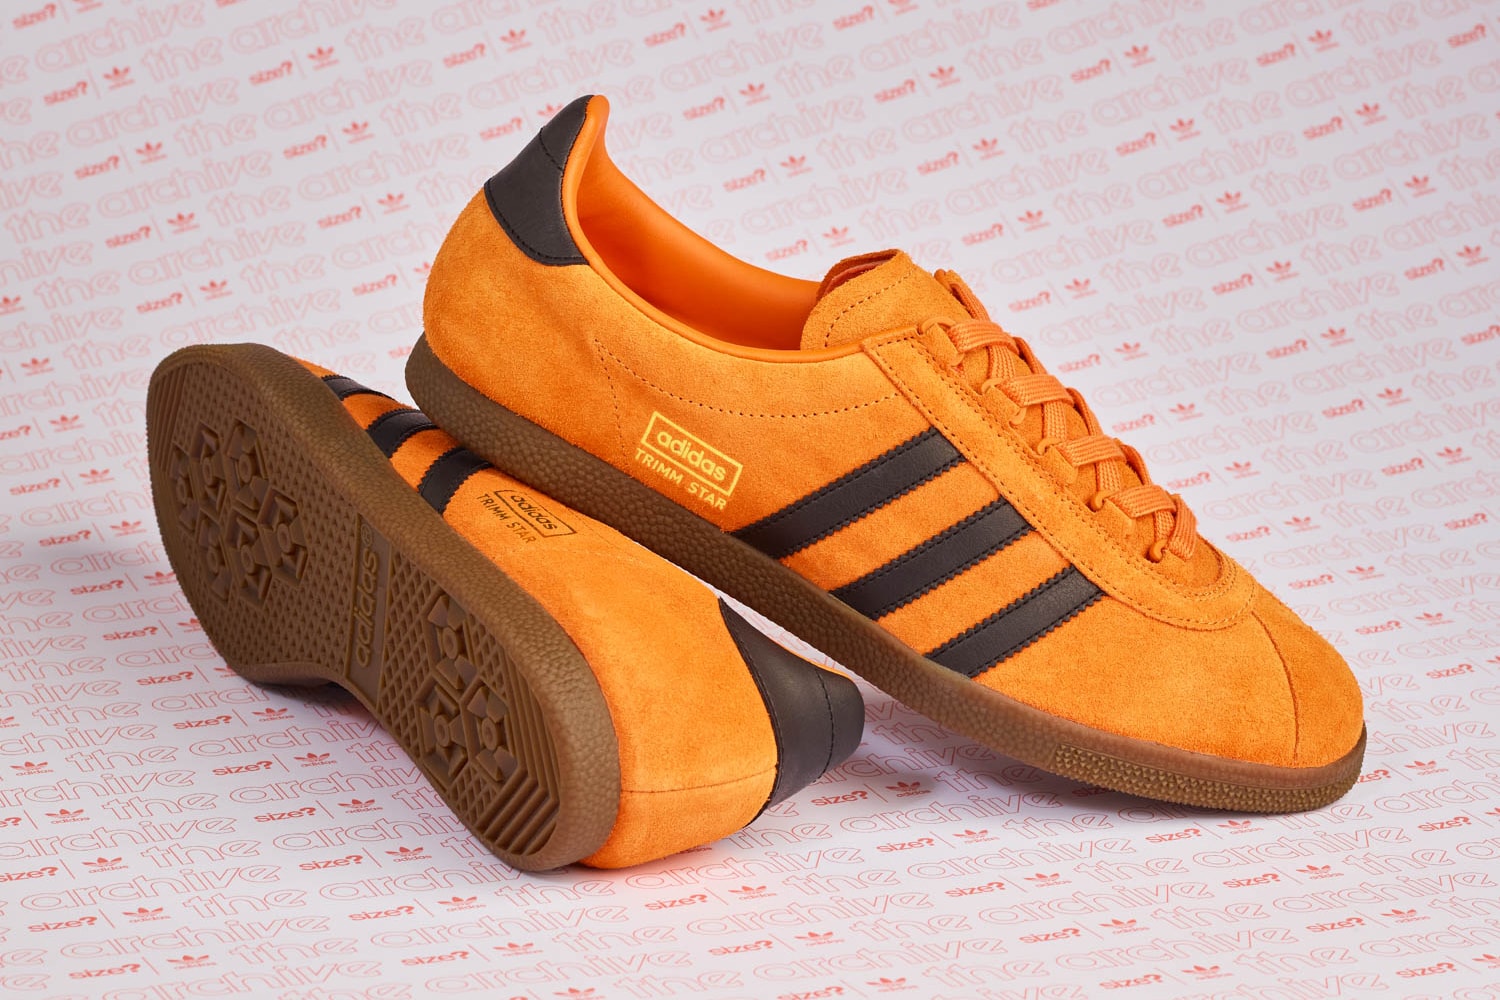 adidas Originals Archive Trimm Star Pumpkin Sneaker Details Size? Official Collaboration Release Cop Purchase Buy Kicks Shoes Trainers Orange Vintage